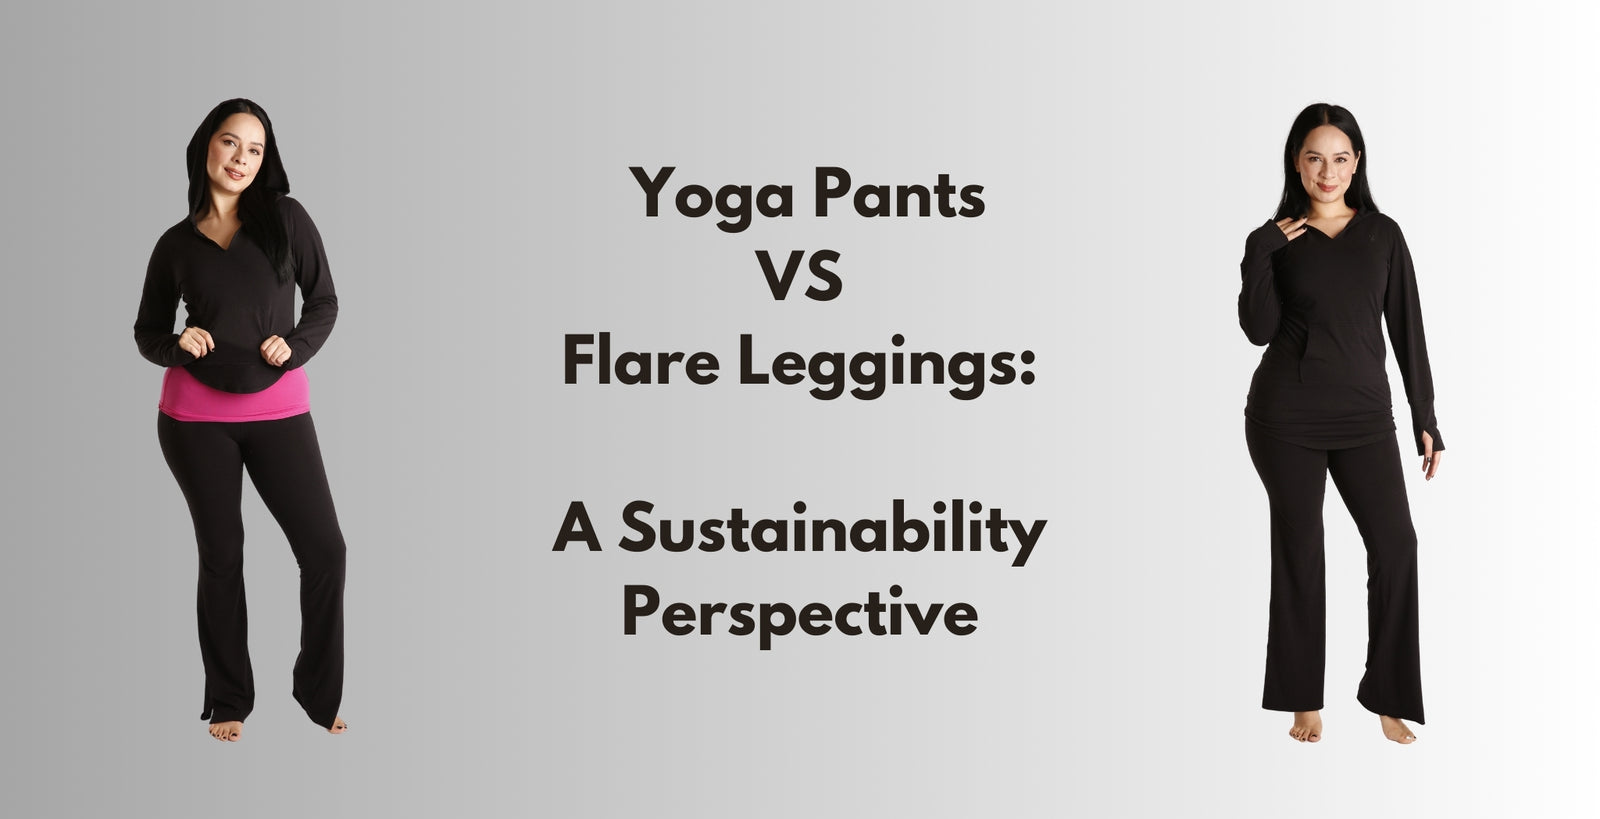 Essential Flare Capri Yoga Pants